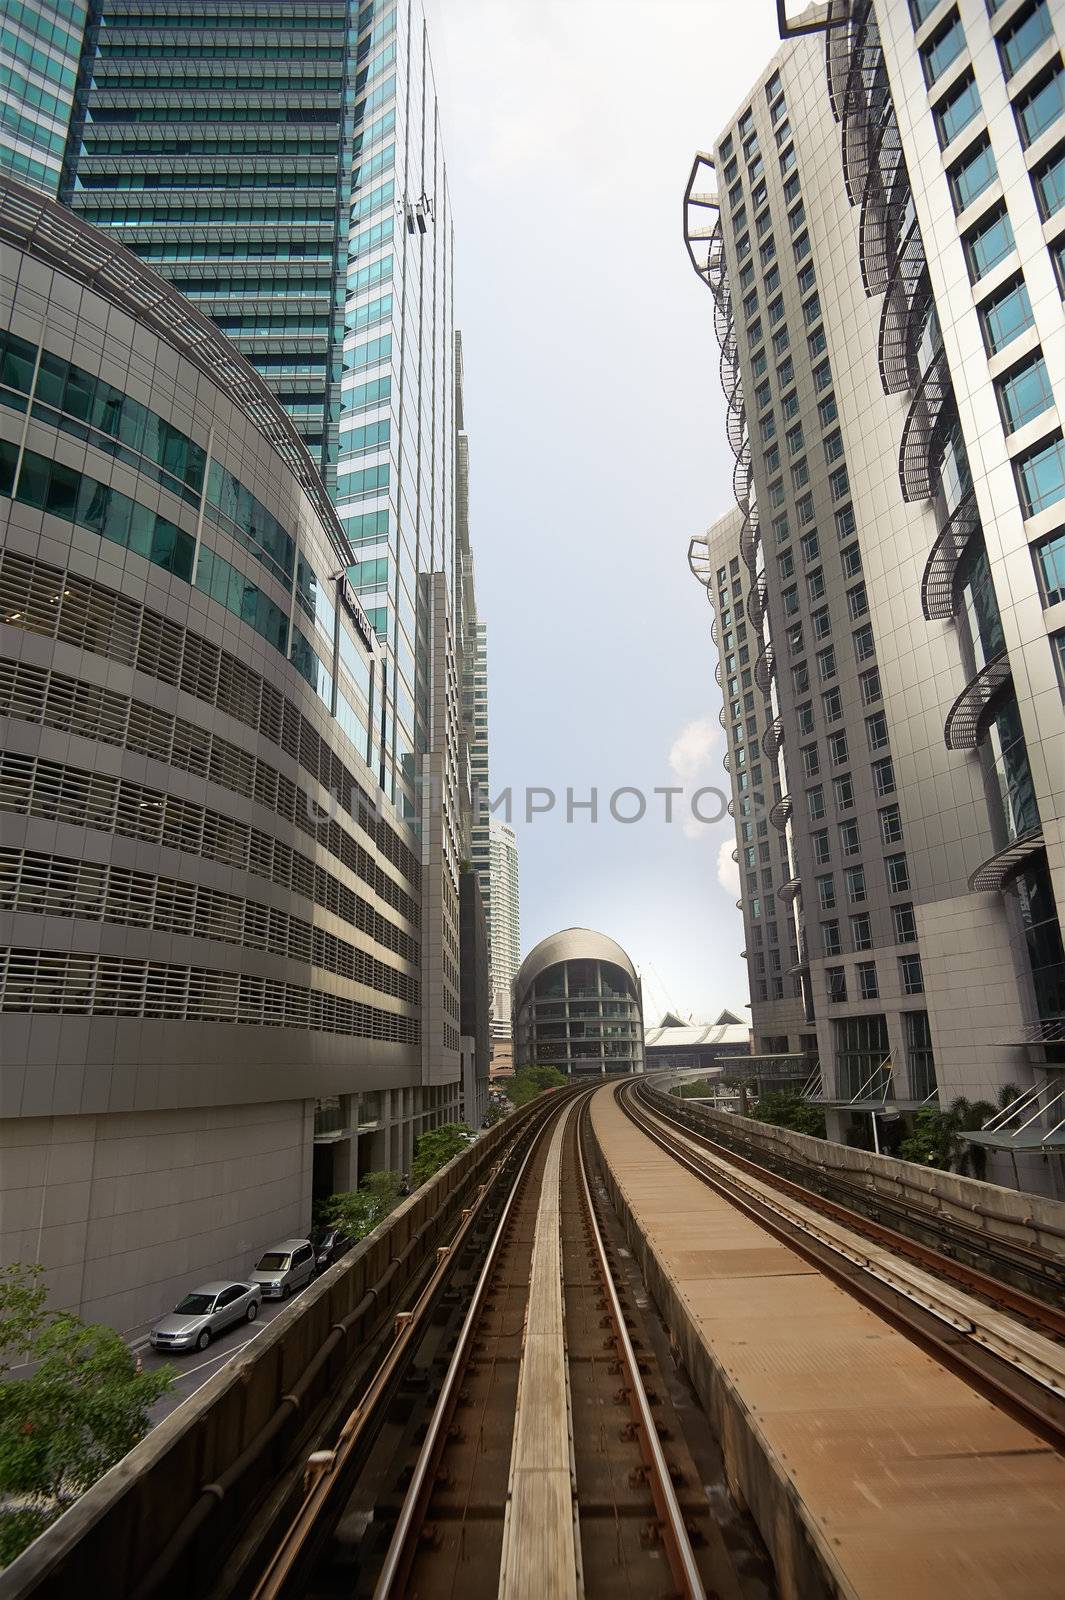 City scenery with railroad over business skyscraper.